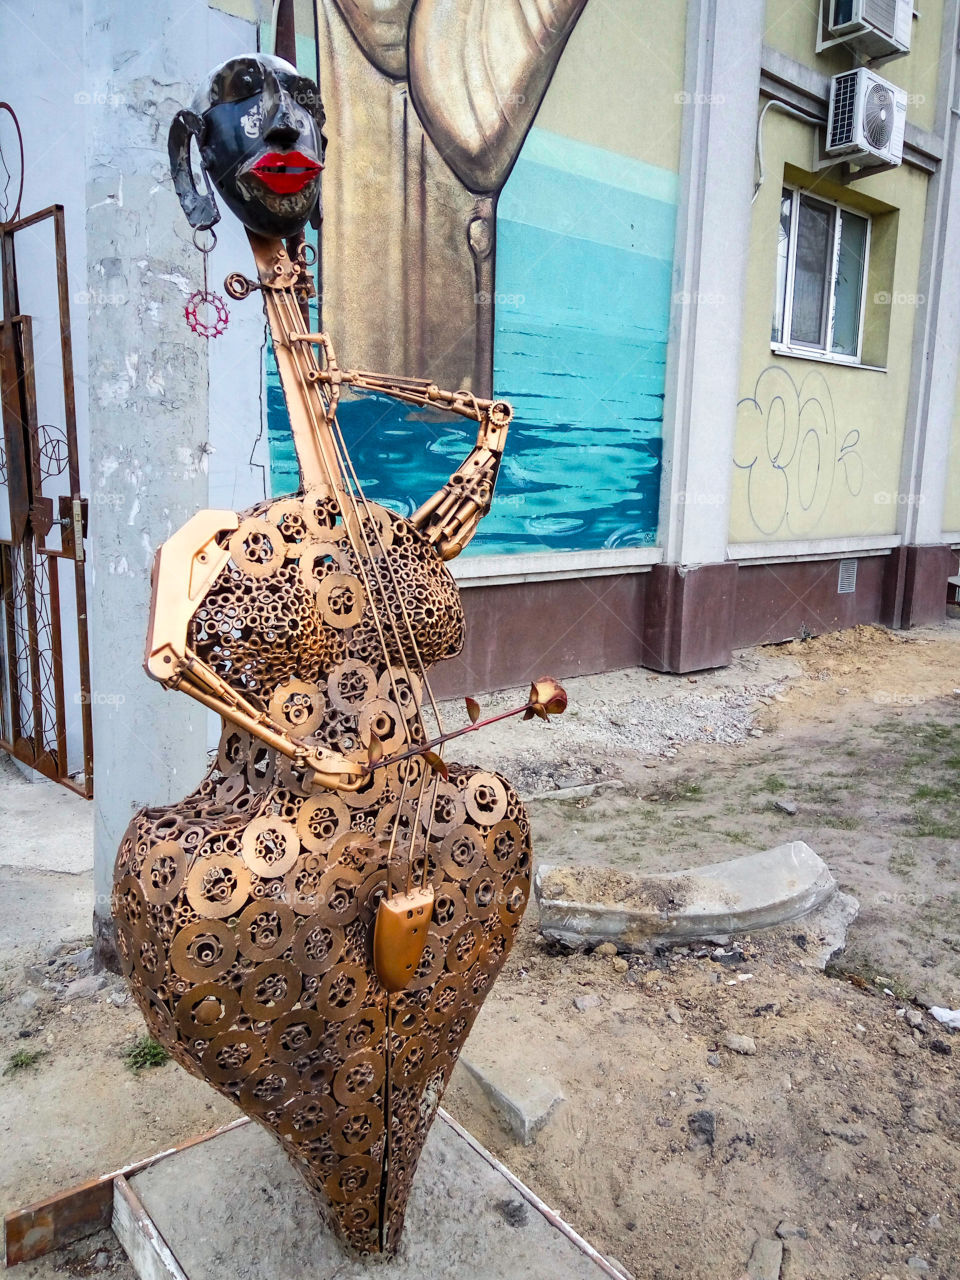 Sculpture in Odesa, Ukraine